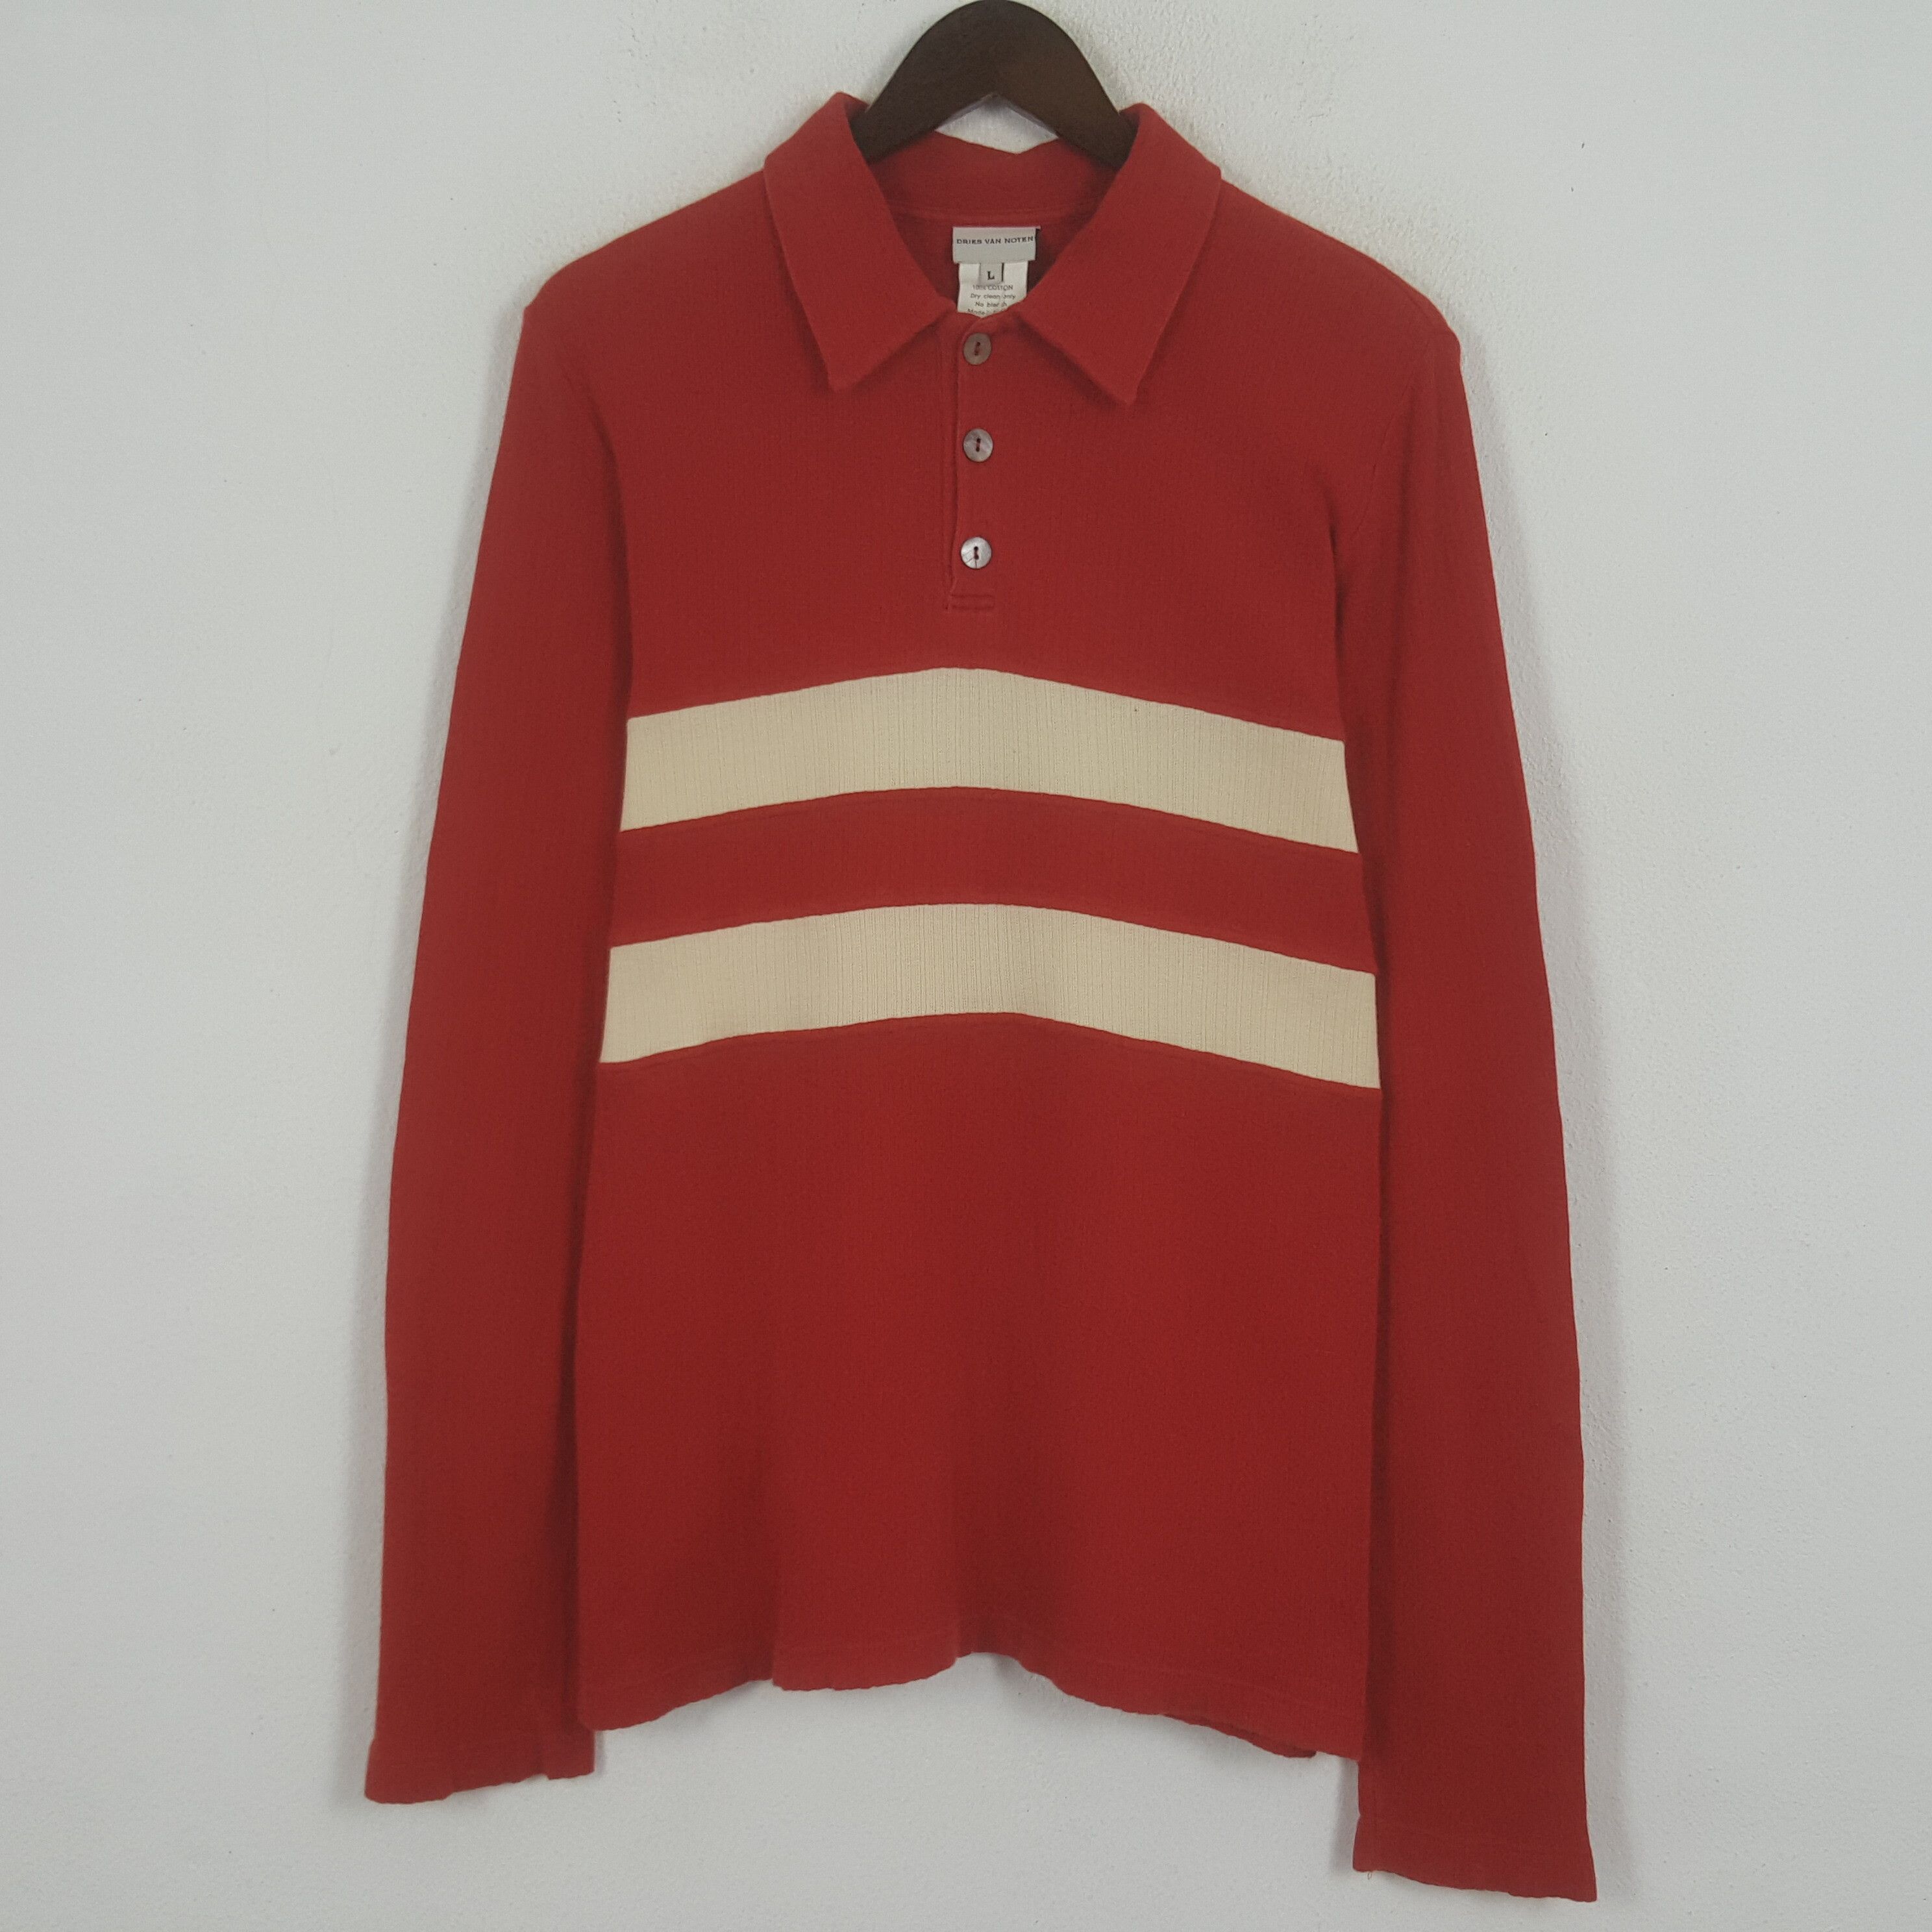 Dries Van Noten Vintage Drien Van Noten Striped Polos Shirt | Grailed